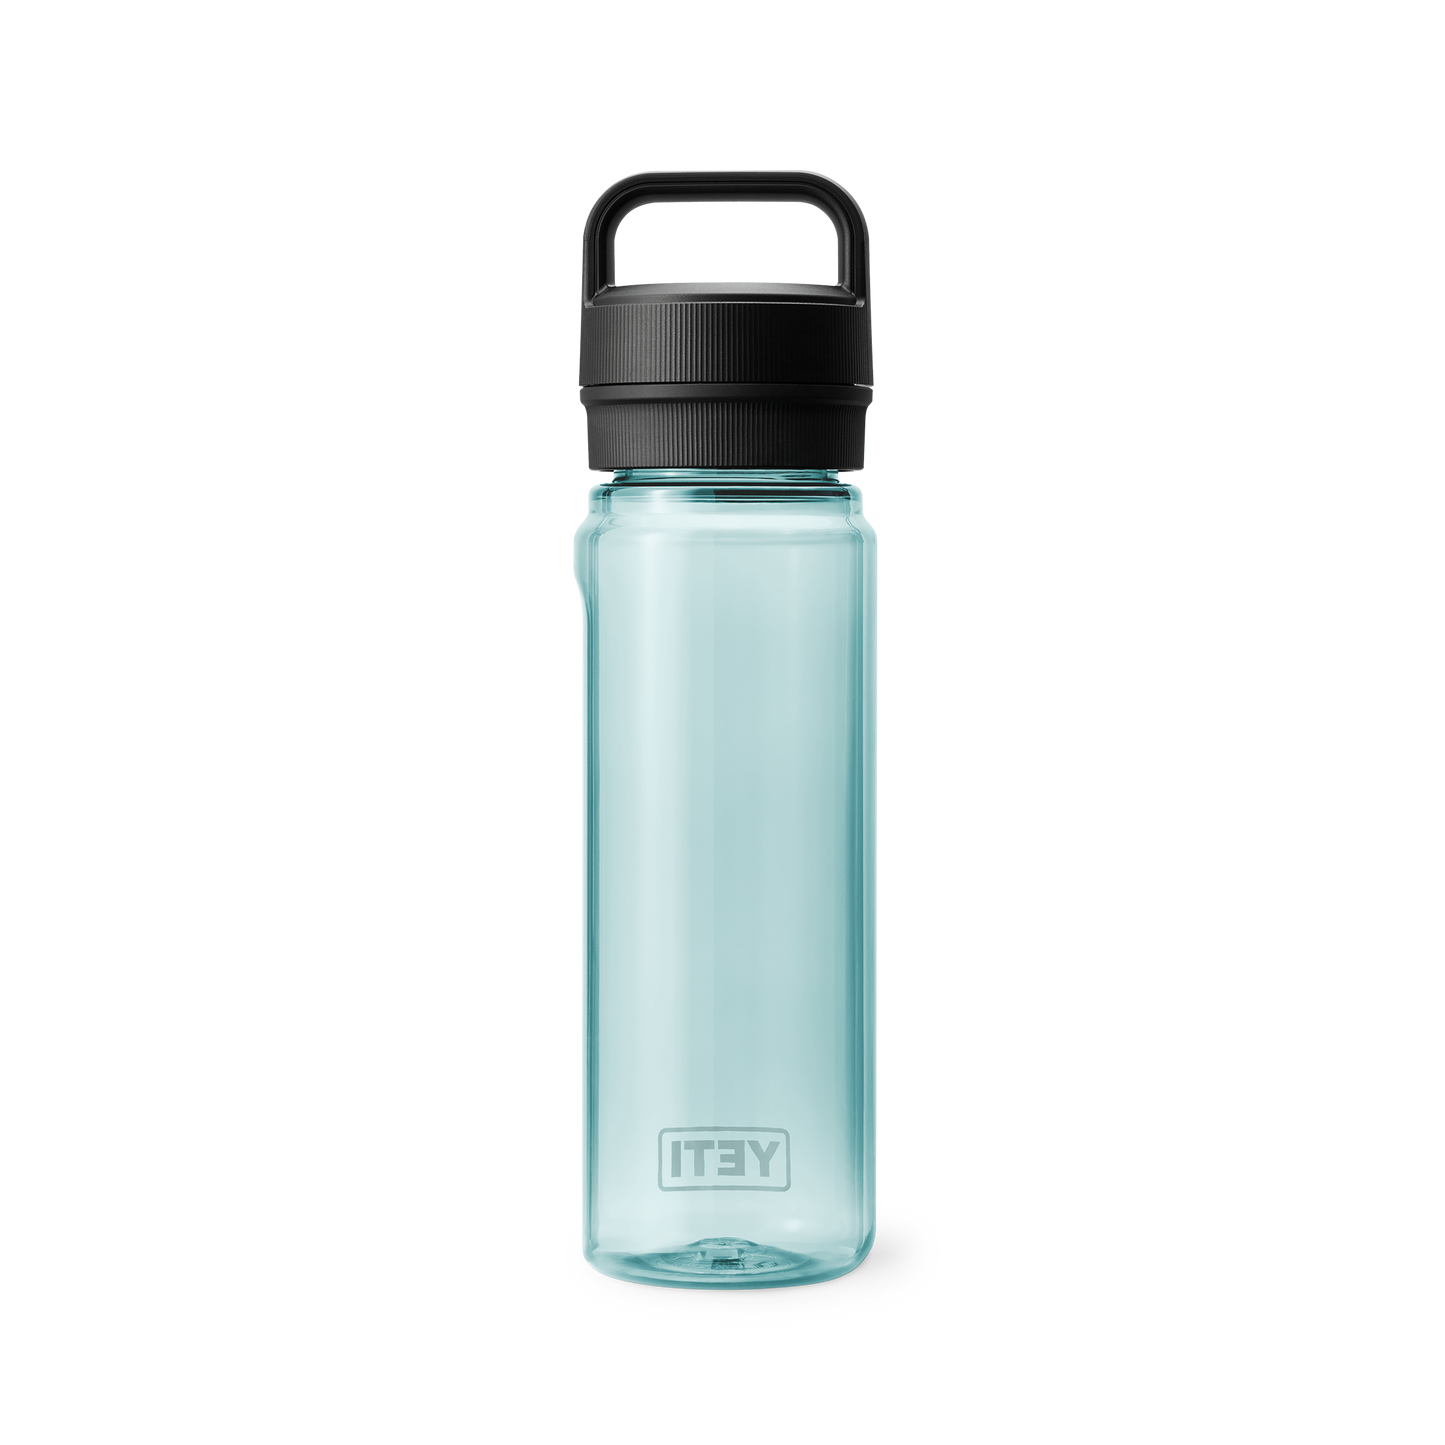 Yonder 25 oz / 0.75 L Water Bottle